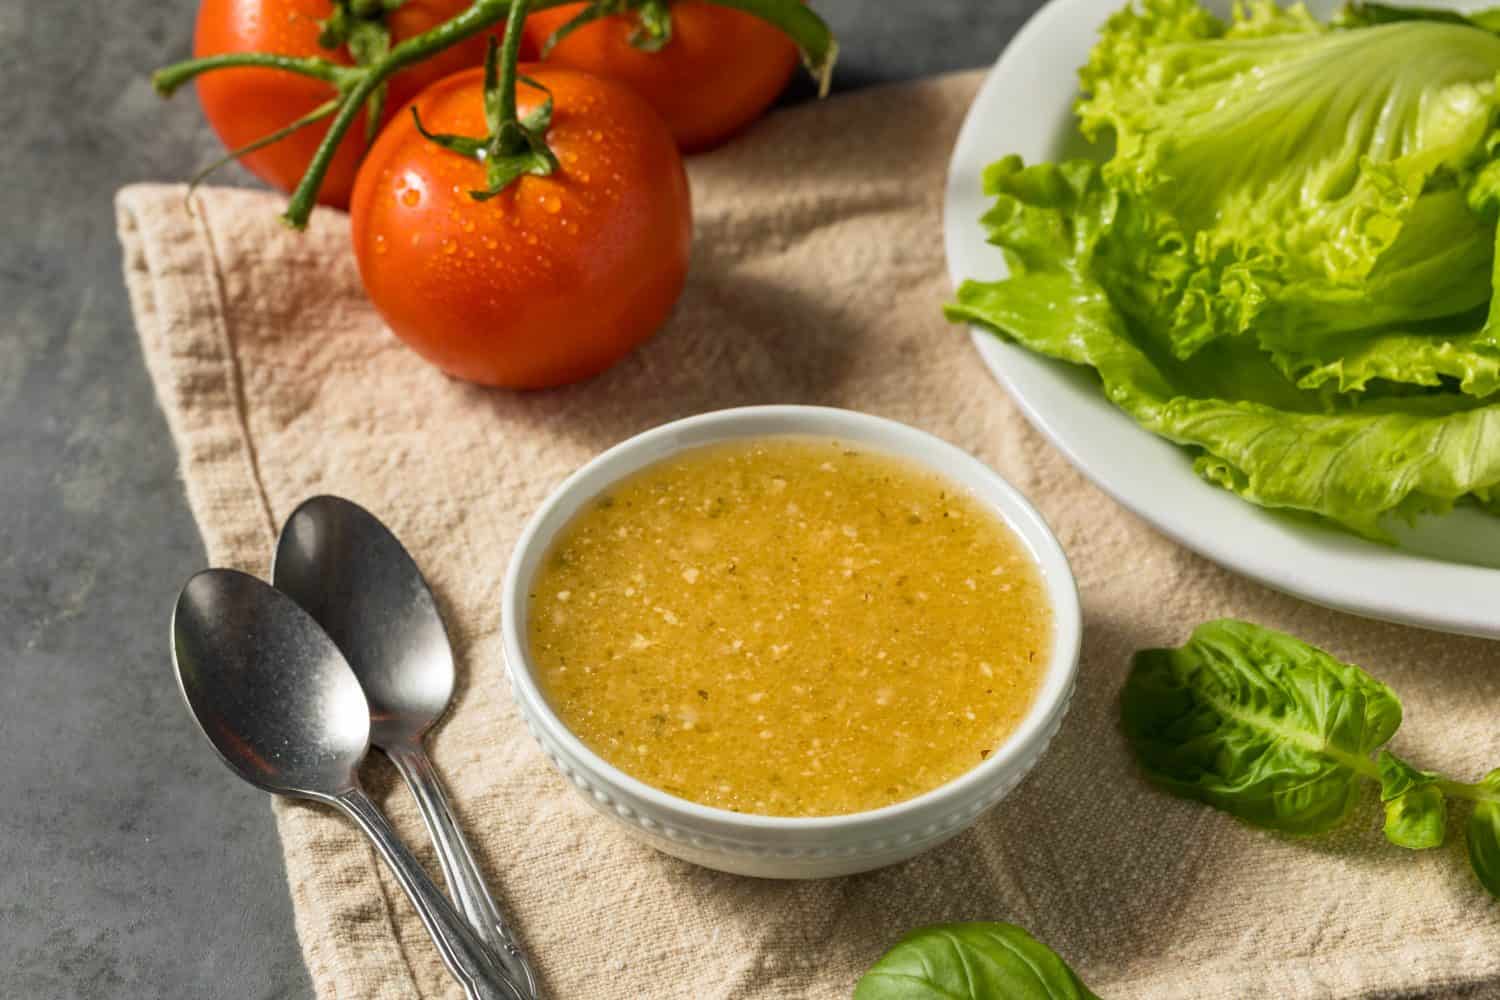 Organic Homemade Italian Salad Dressing with Garlic and Oil